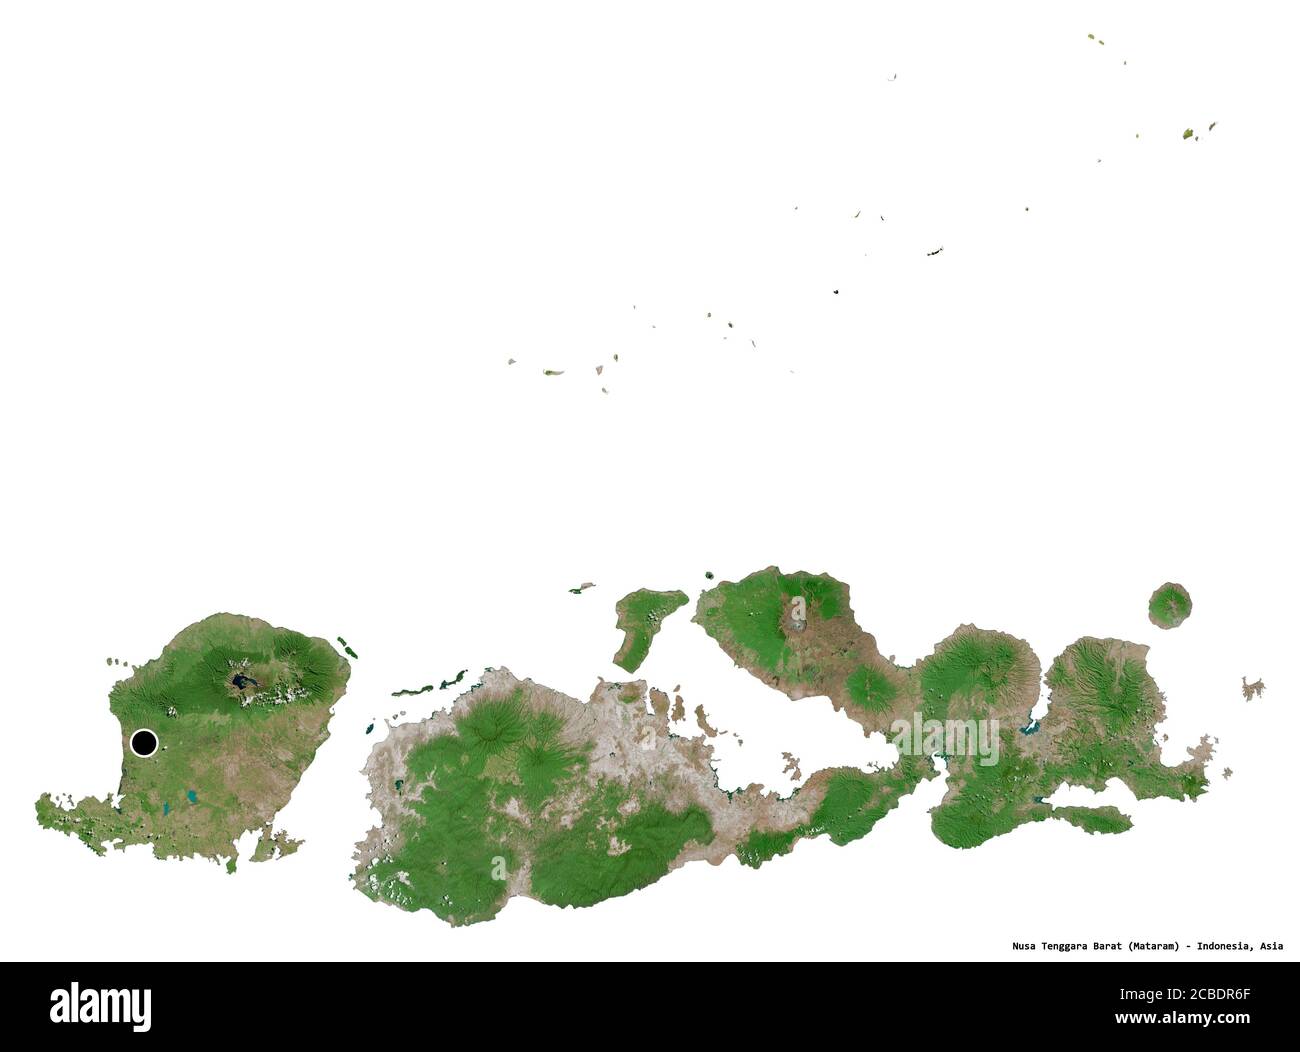 Gambar Peta Nusa Tenggara Barat